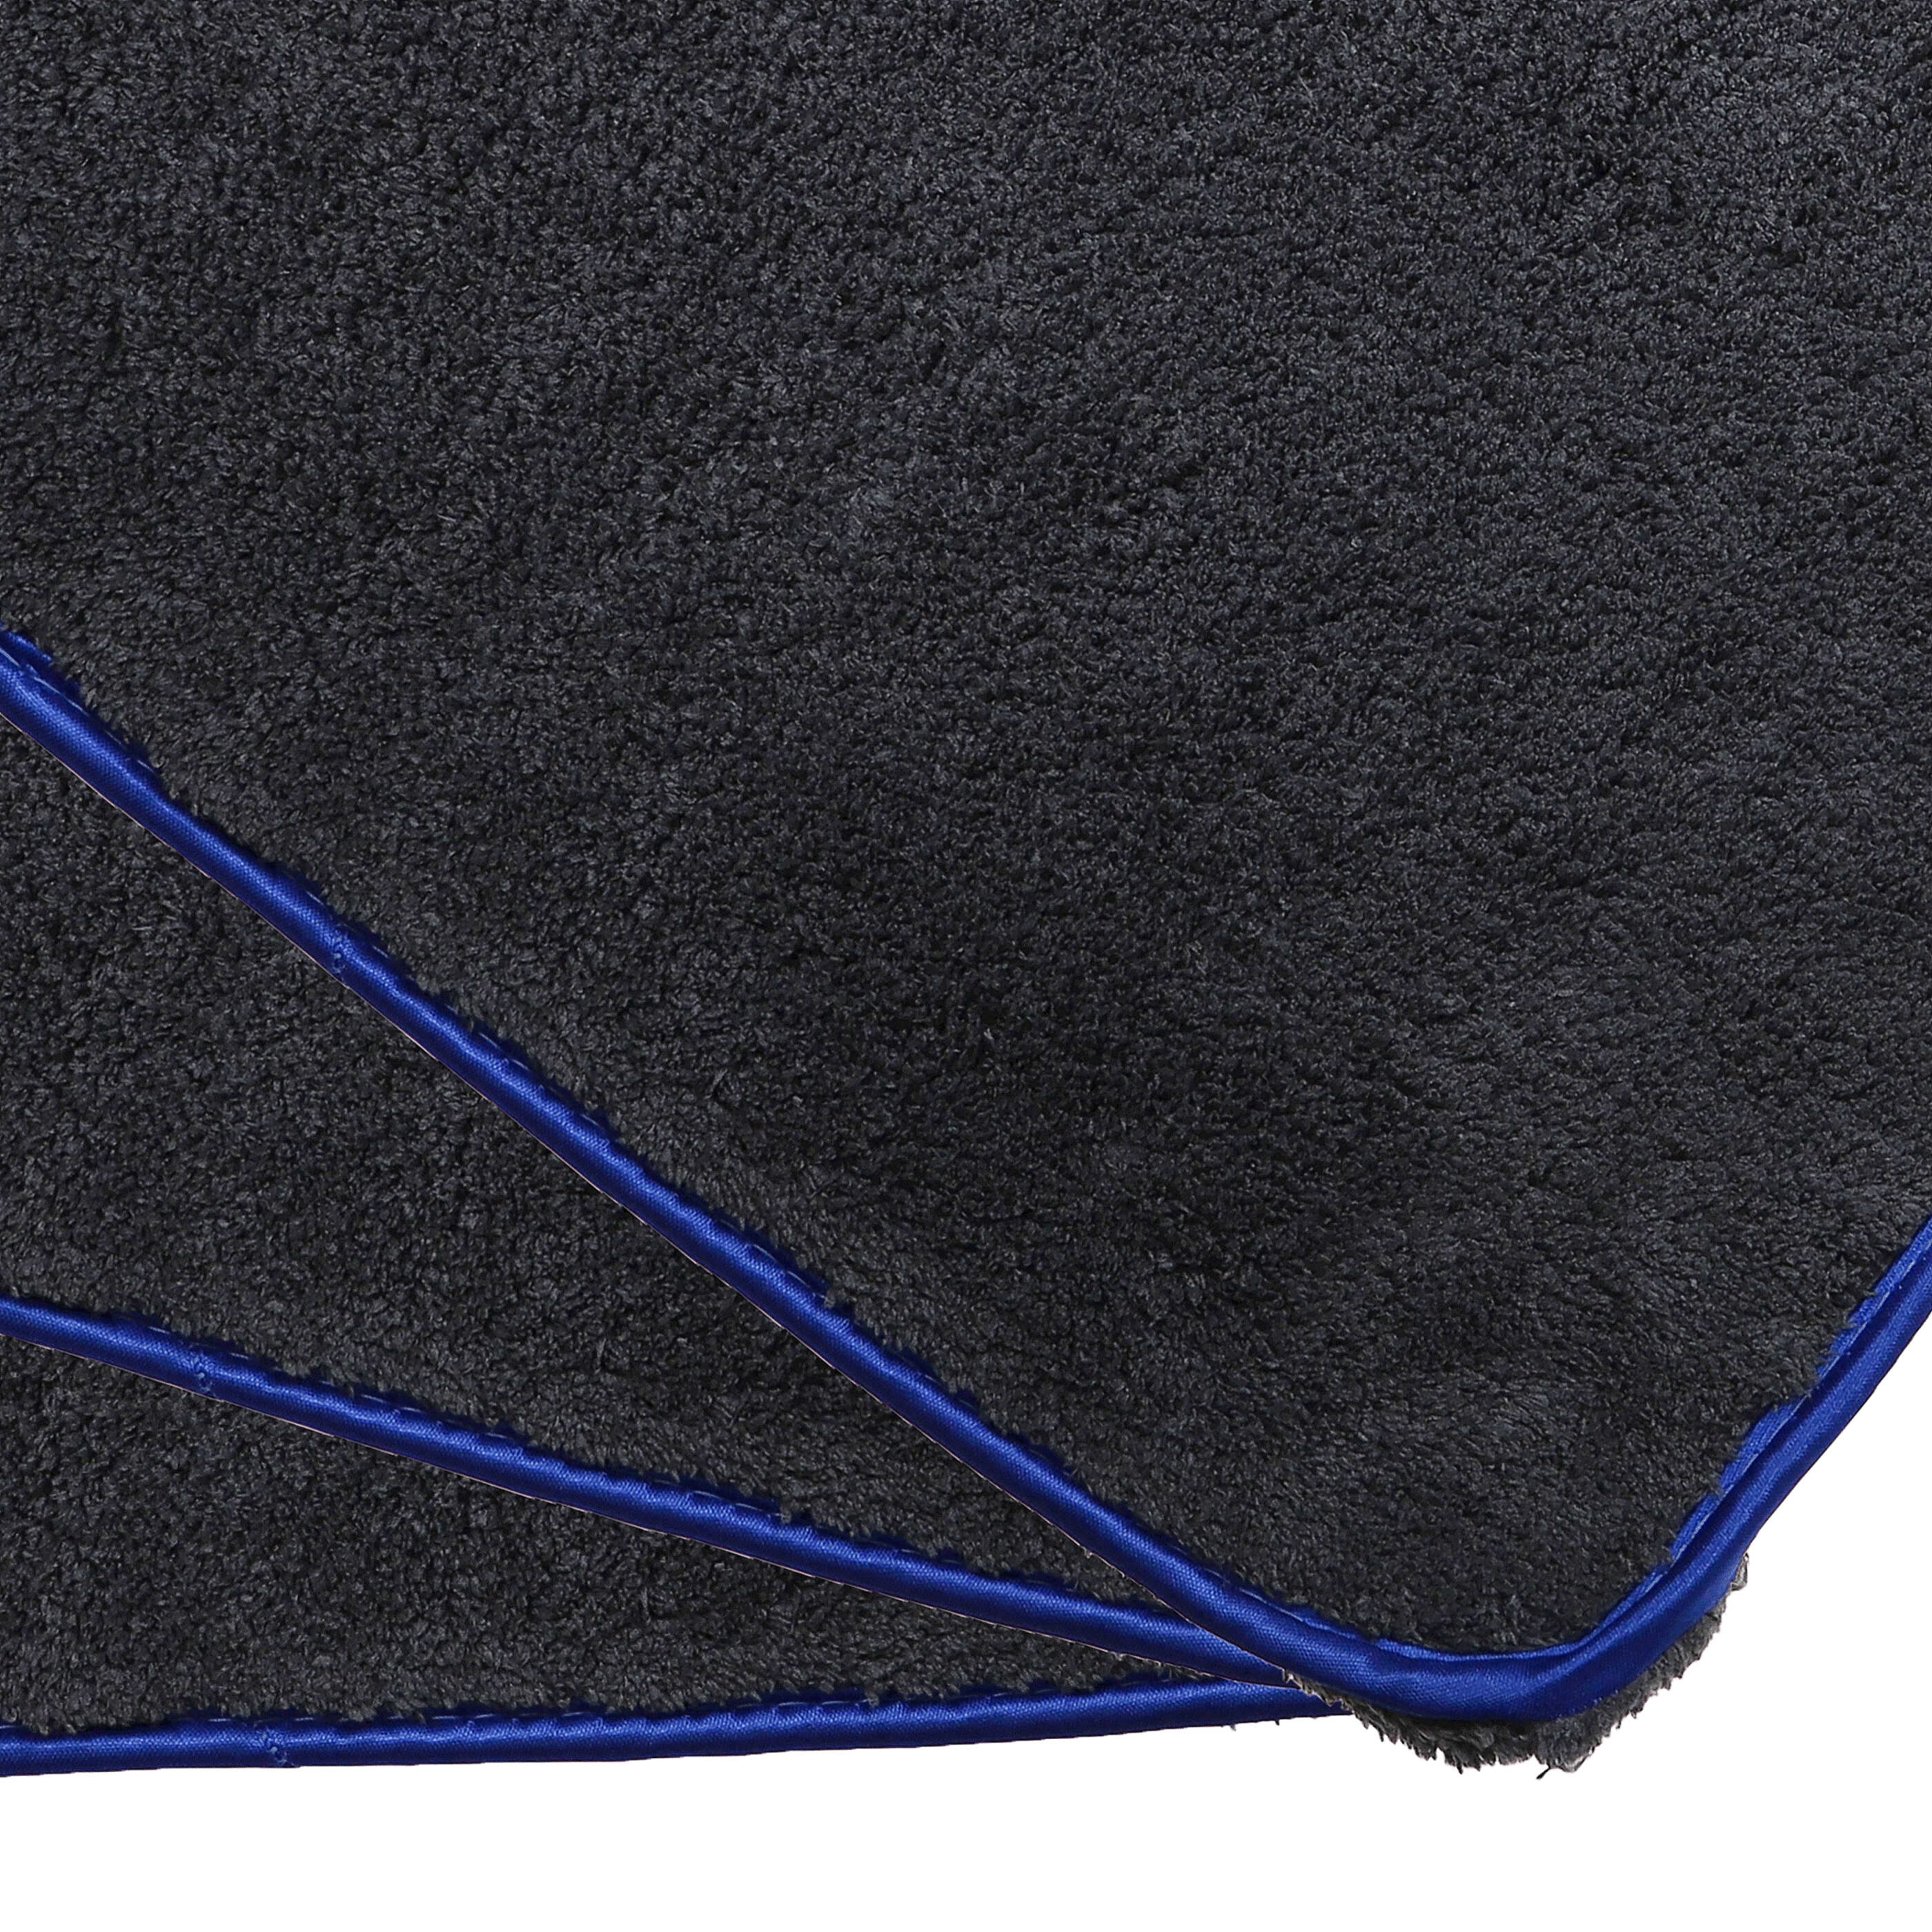 Microfibre Towel Set (3 Part) for Cars and Motorcycles - 40 x 40 cm, Reusable, Black/Blue